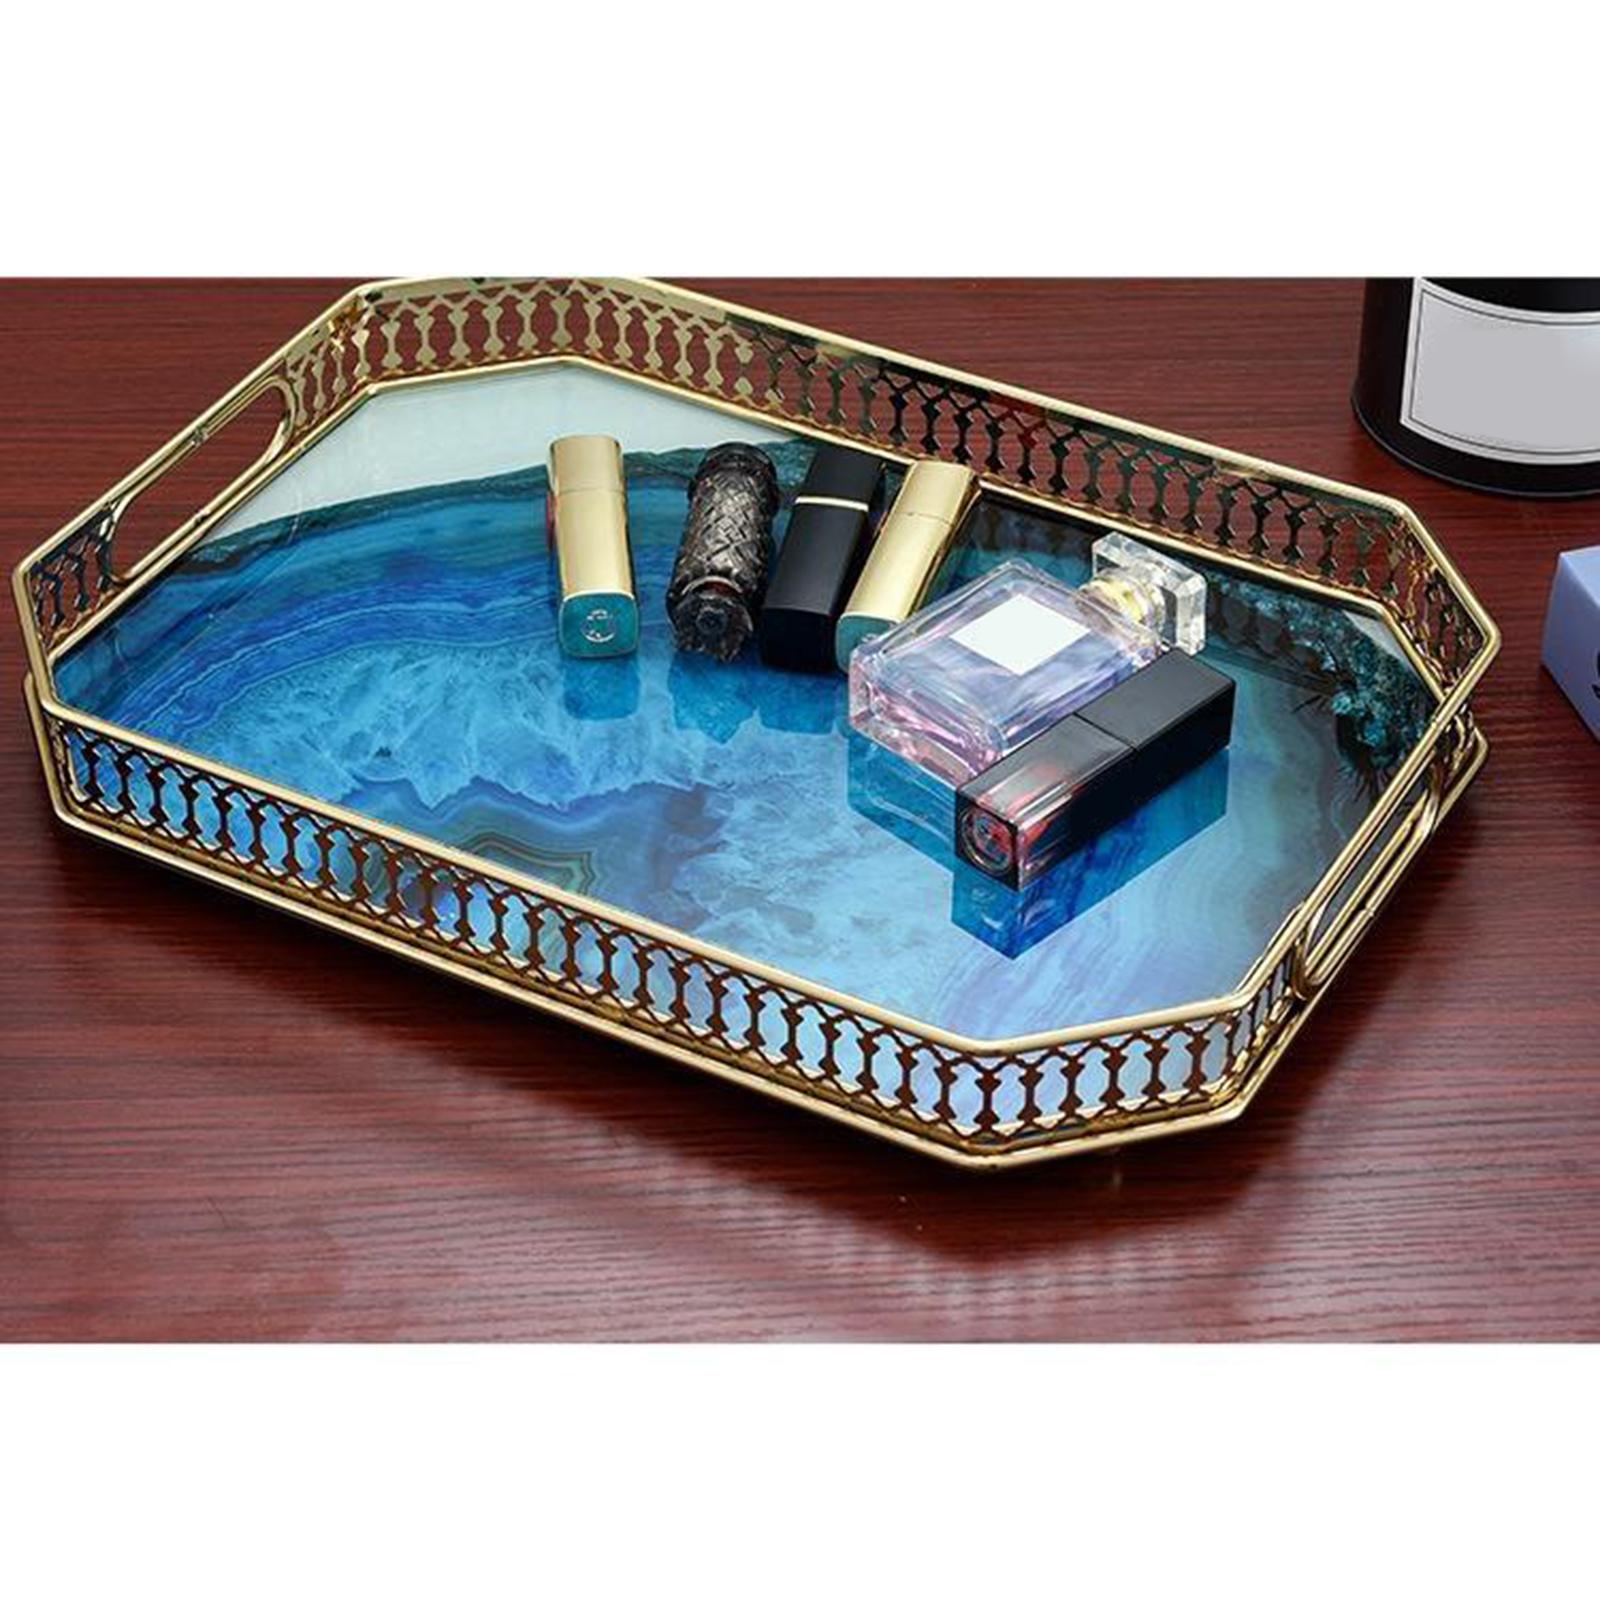 Mirrored Crystal Vanity Makeup Tray Ornate Jewelry Trinket Tray Organizer Cosmetic Perfume Bottle Tray Decorative Tray Home Decor